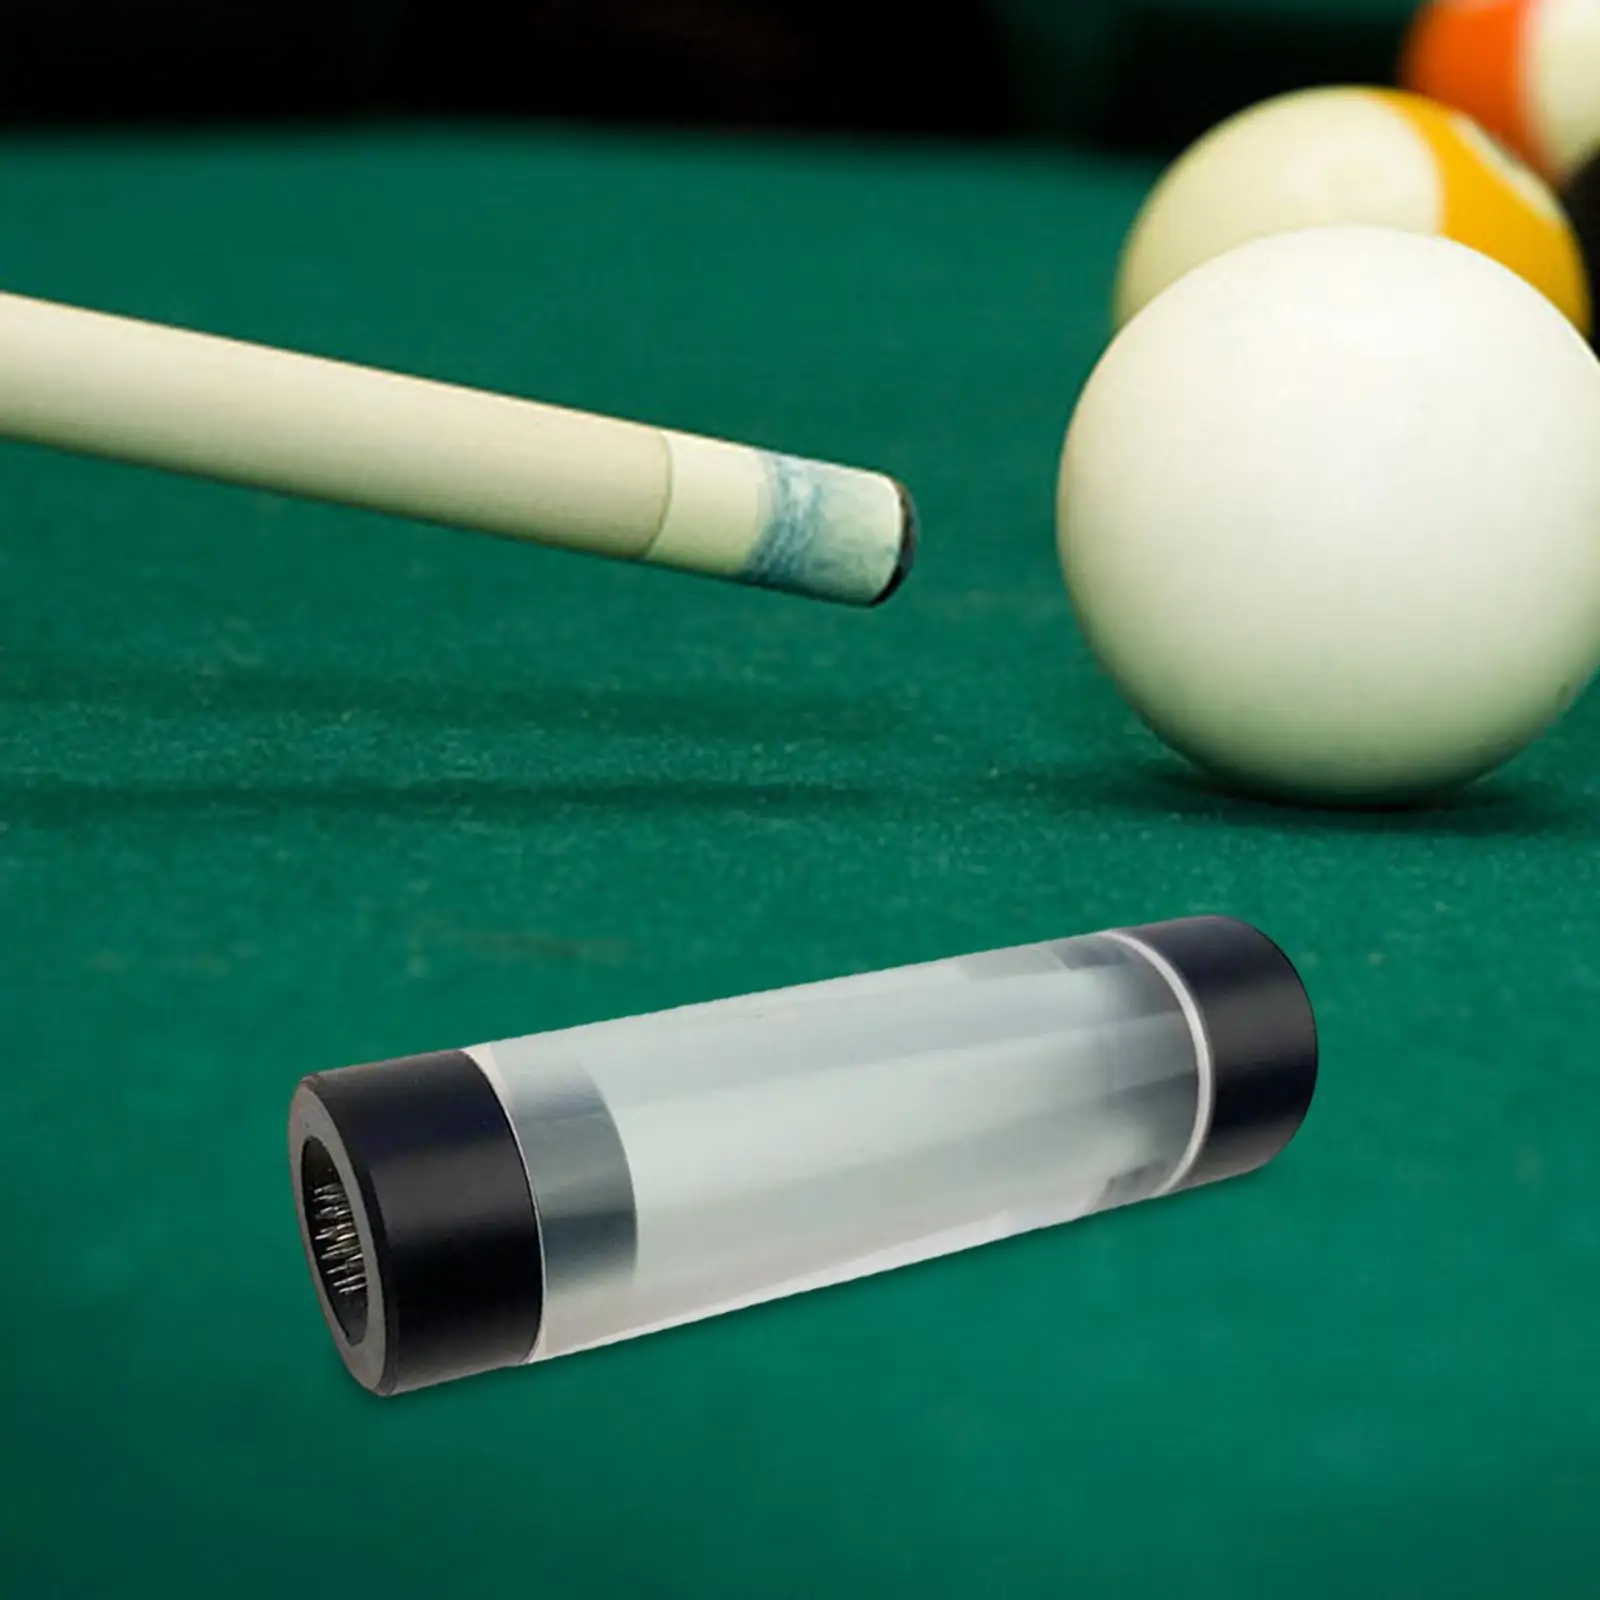 2 in 1 Snooker Pool Cue Tip Tool Billiard Cue Accessories Shaper/Tapper/Aerator